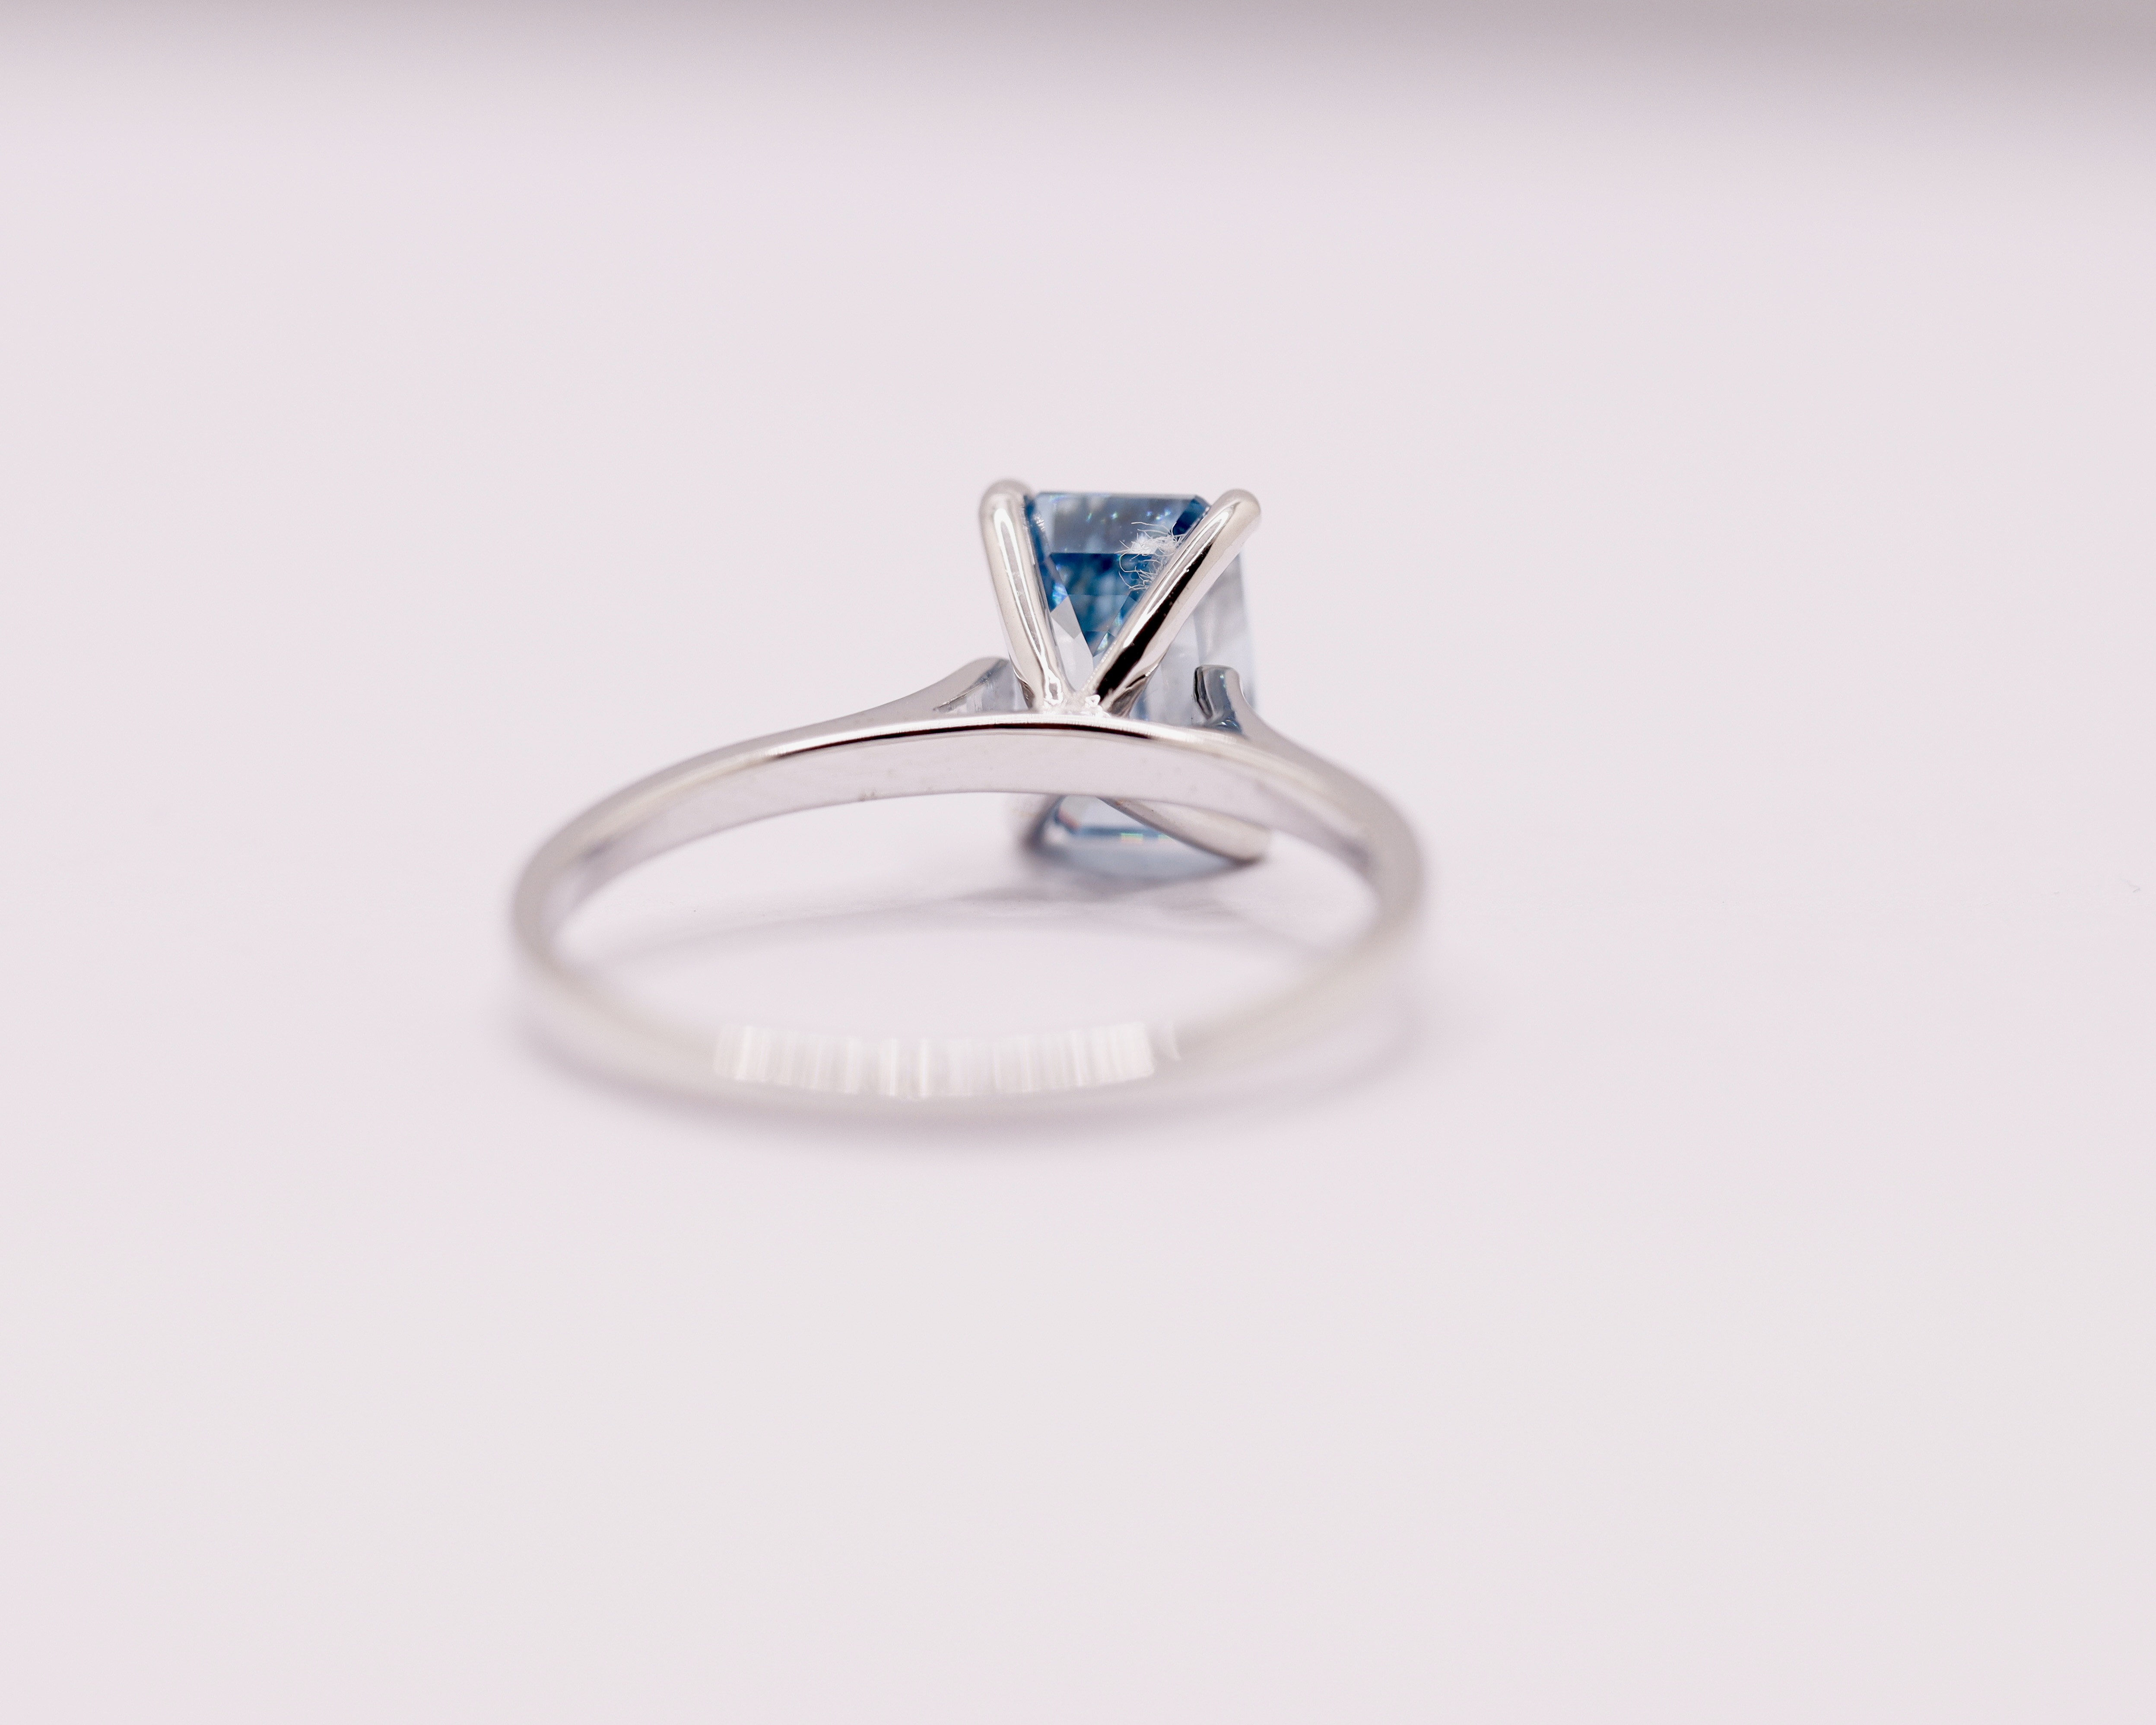 ** ON SALE ** Fancy Blue Emerald Cut 1.50 Carat Diamond 18Kt White Gold Ring -VS1 Clarity - Image 4 of 7